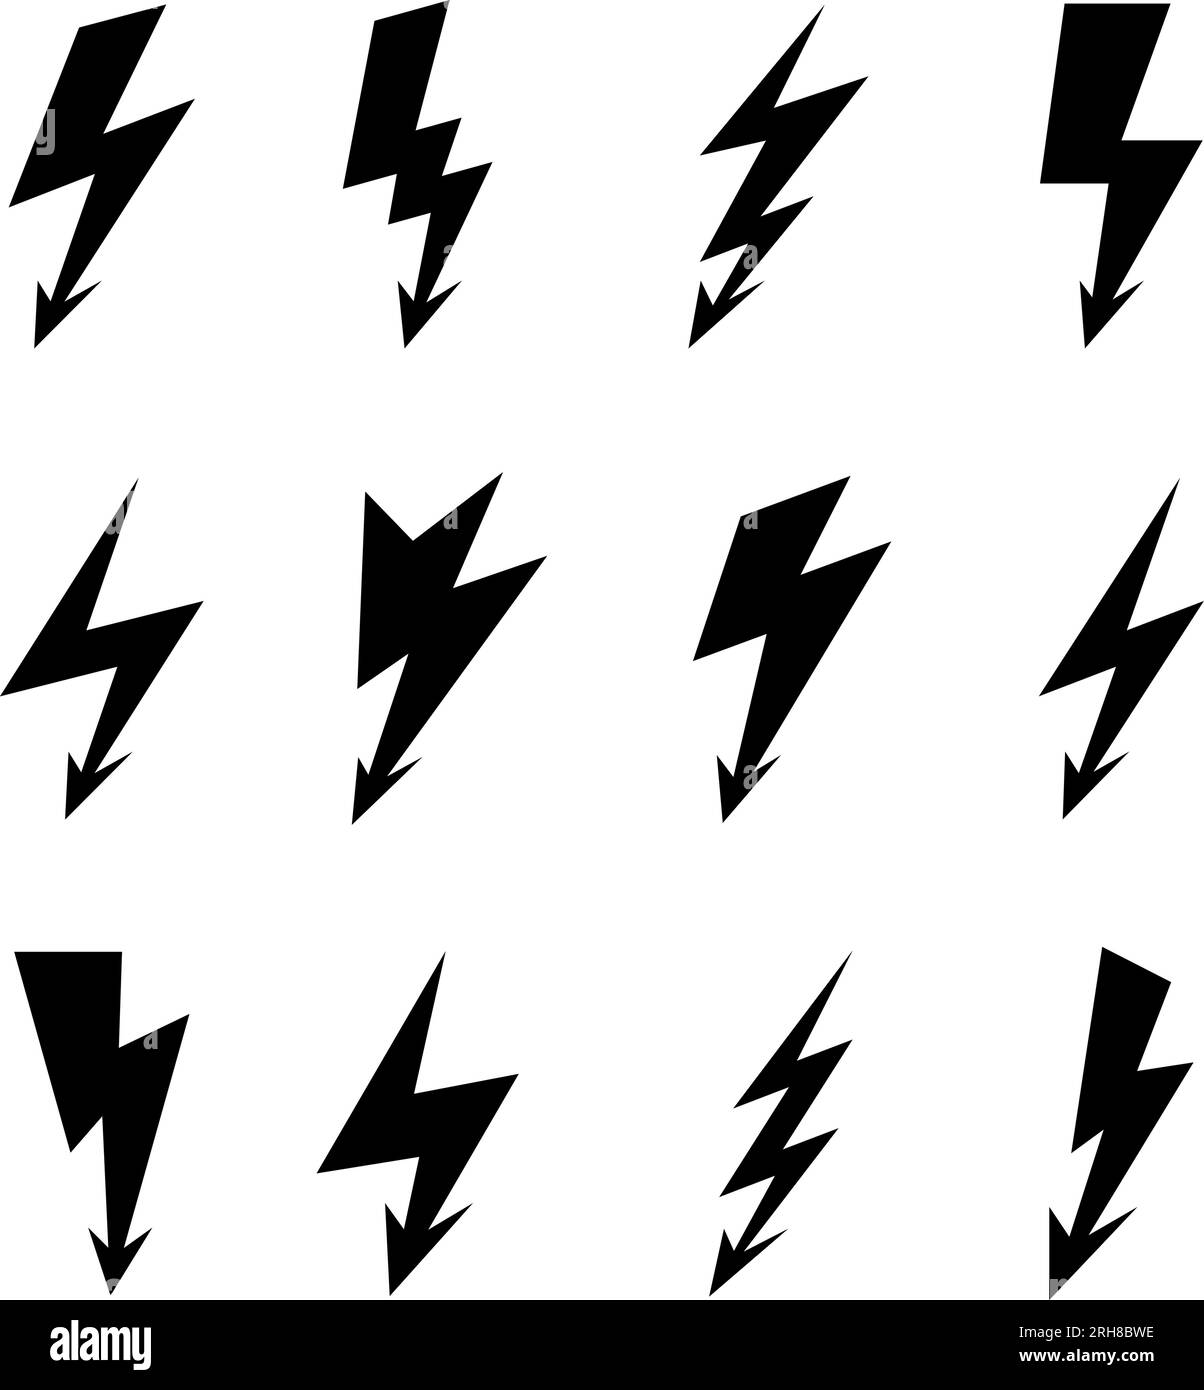 Black Lightning Bolt Icons Isolated on White. Simple Icon Storm or Thunder and Lightning Strike. Simple Cartoon Lightning Strike Sign with Shadow Effe Stock Vector